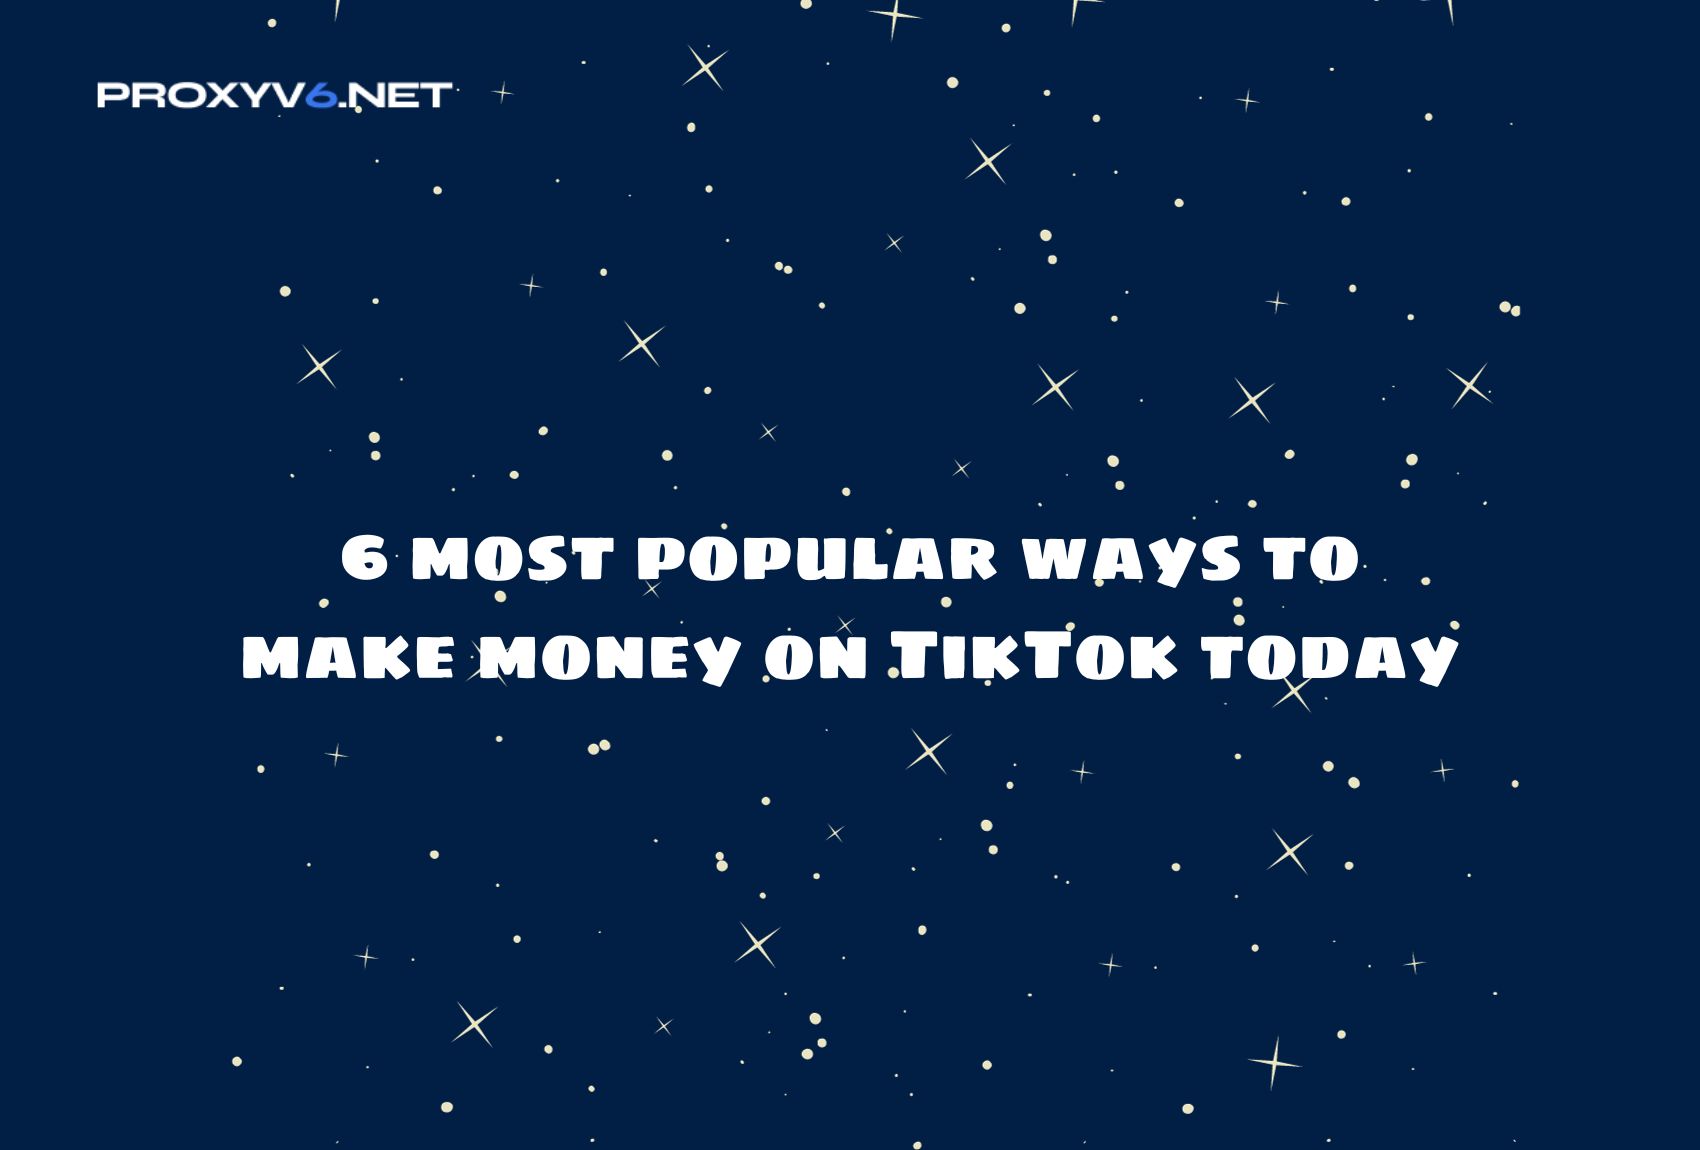 6 most popular ways to make money on TikTok today